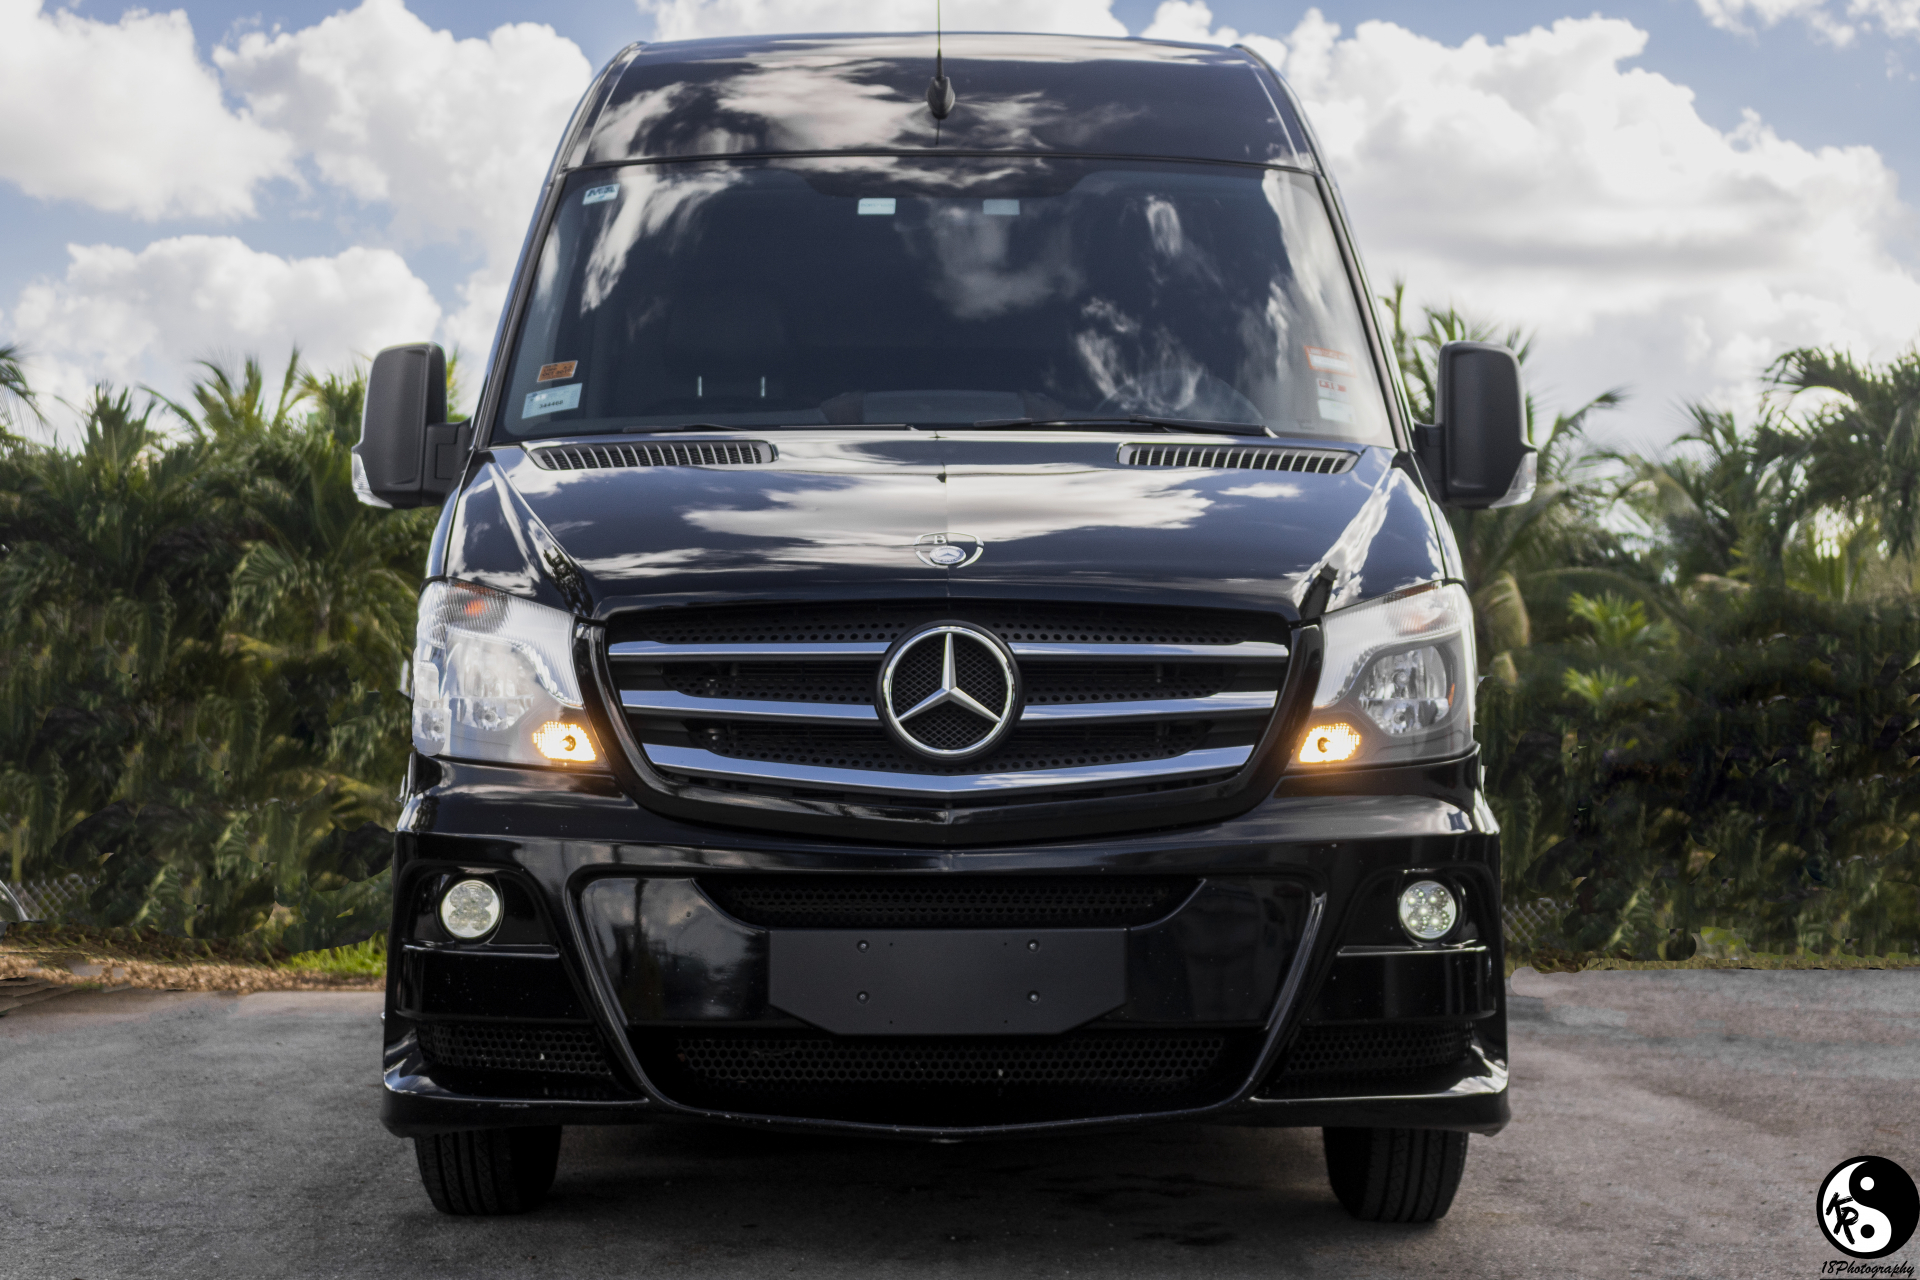 NEW 2016 Mercedes Benz Sprinter Limo Coach
Van /
Naples, FL

 / Hourly $0.00
